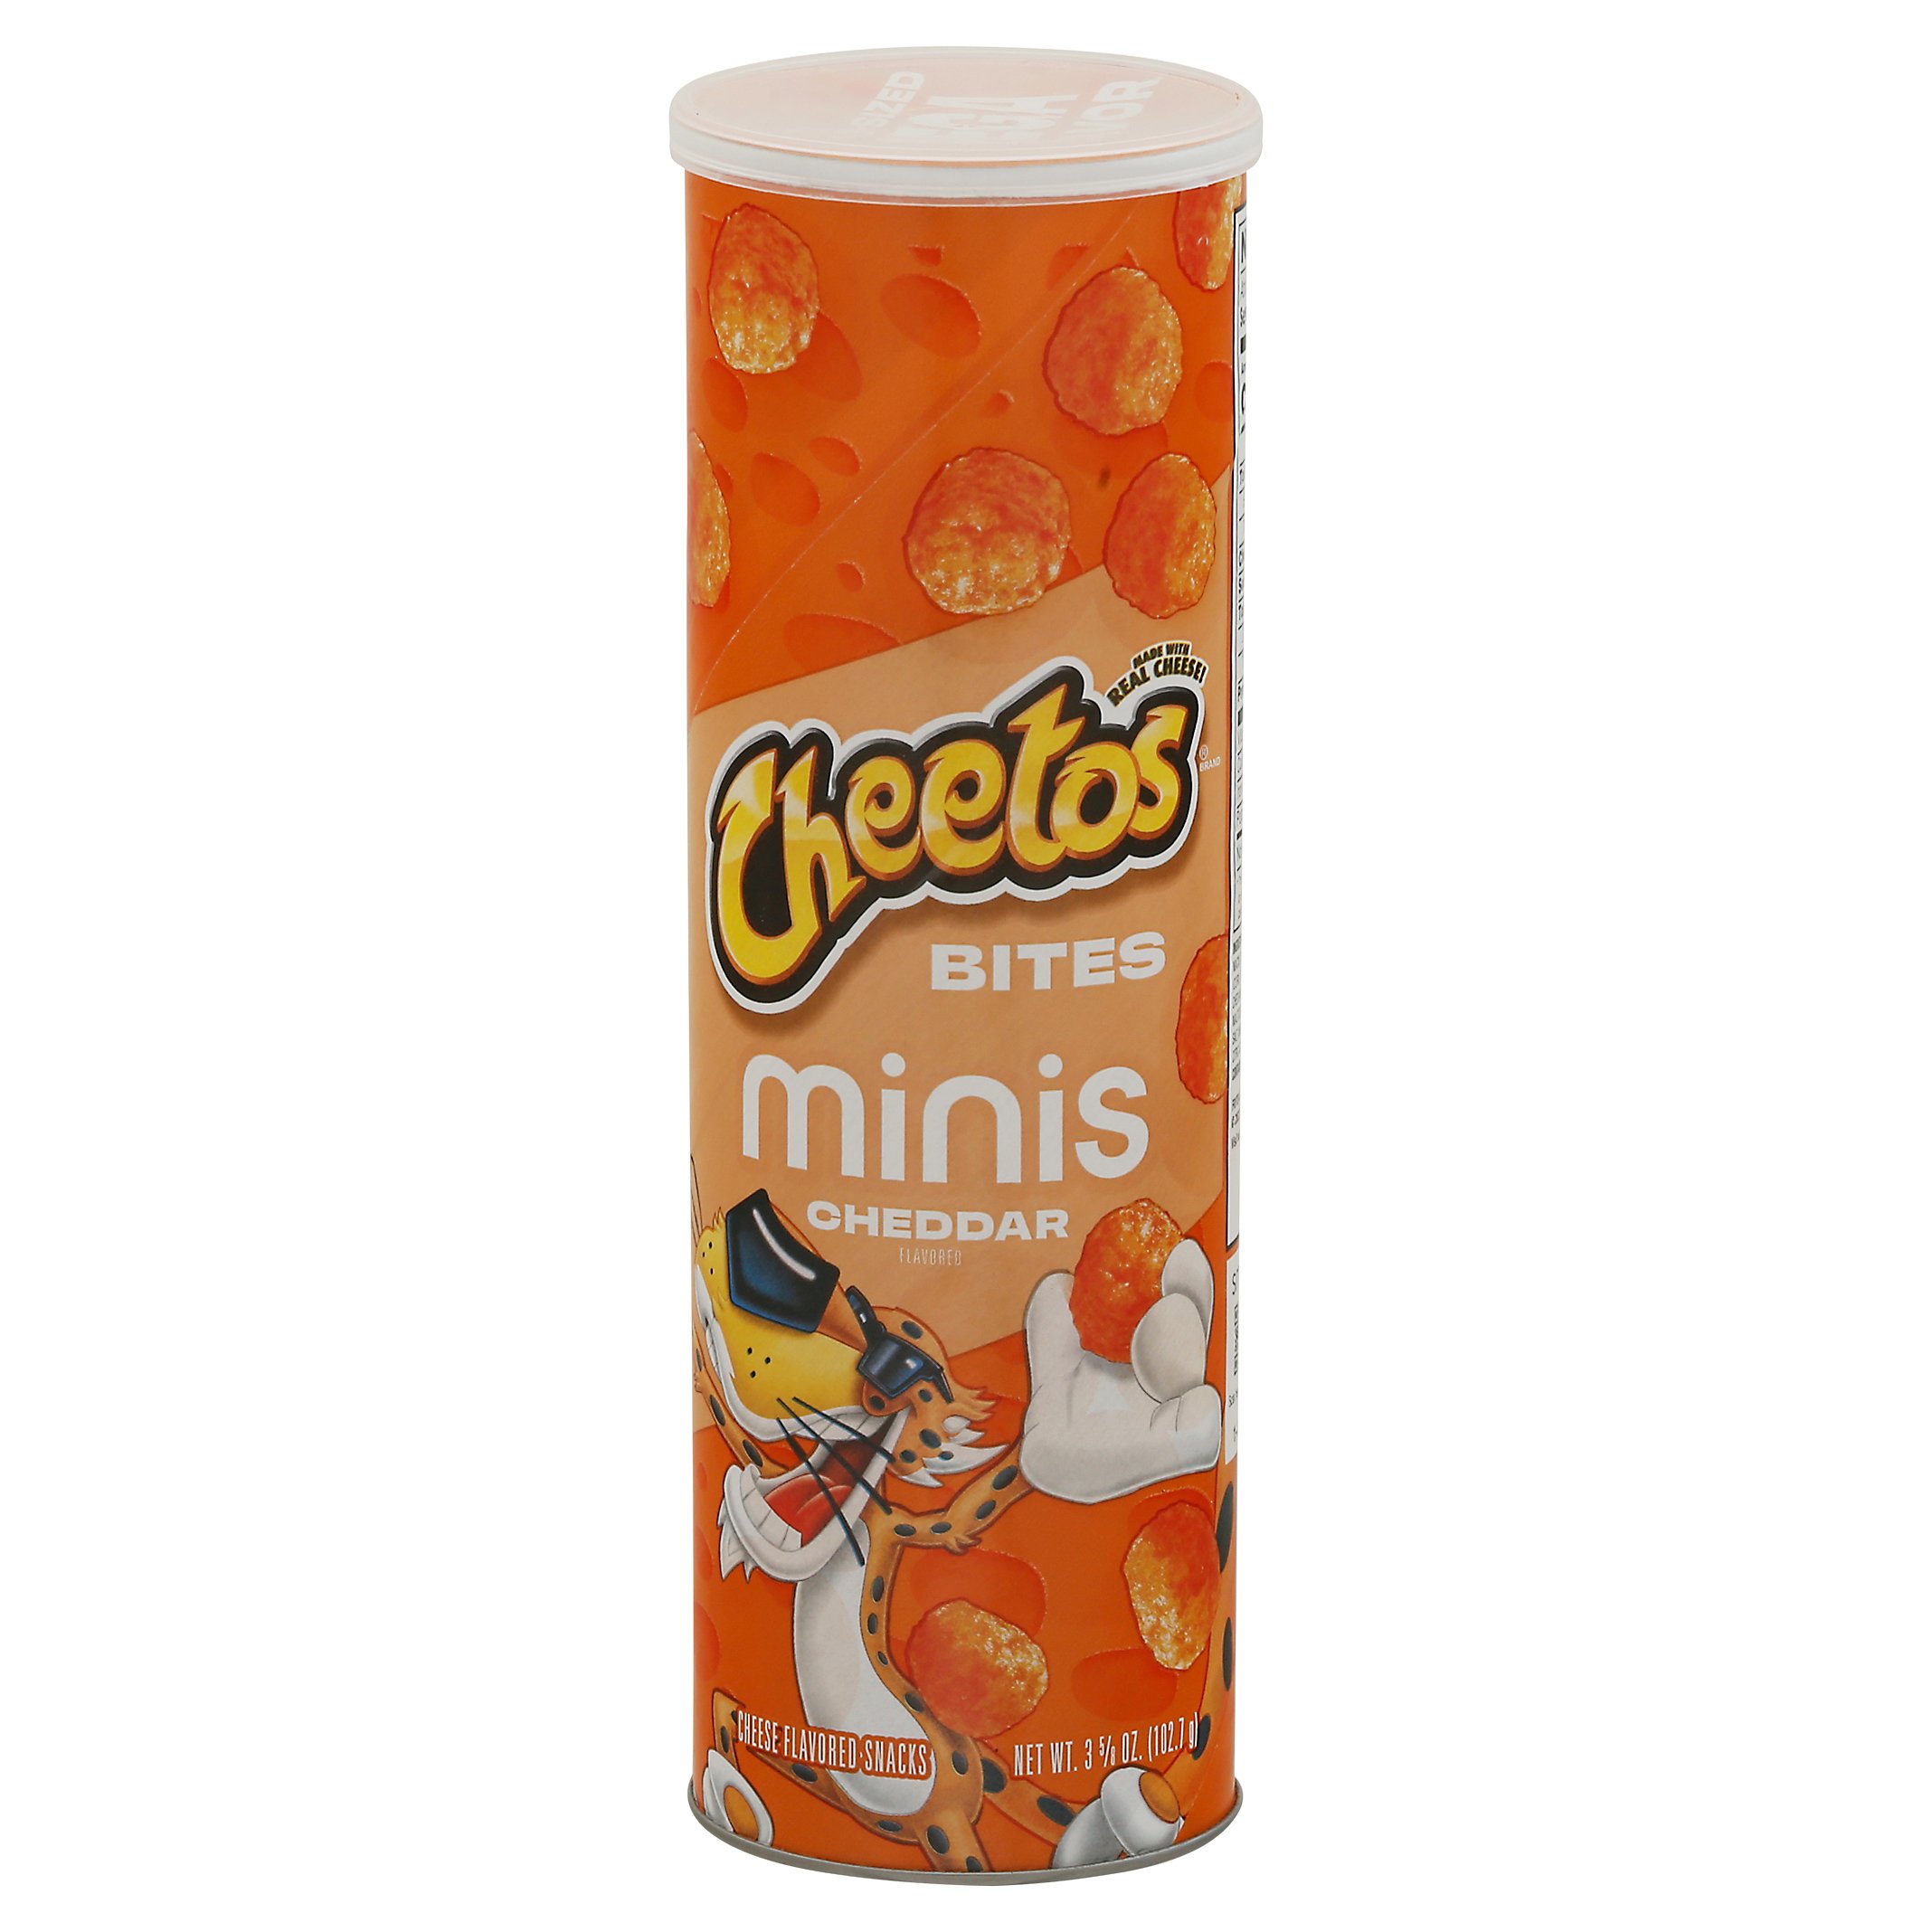 Cheetos Puffs Minis Cheddar Cheese Snacks - Shop Chips at H-E-B